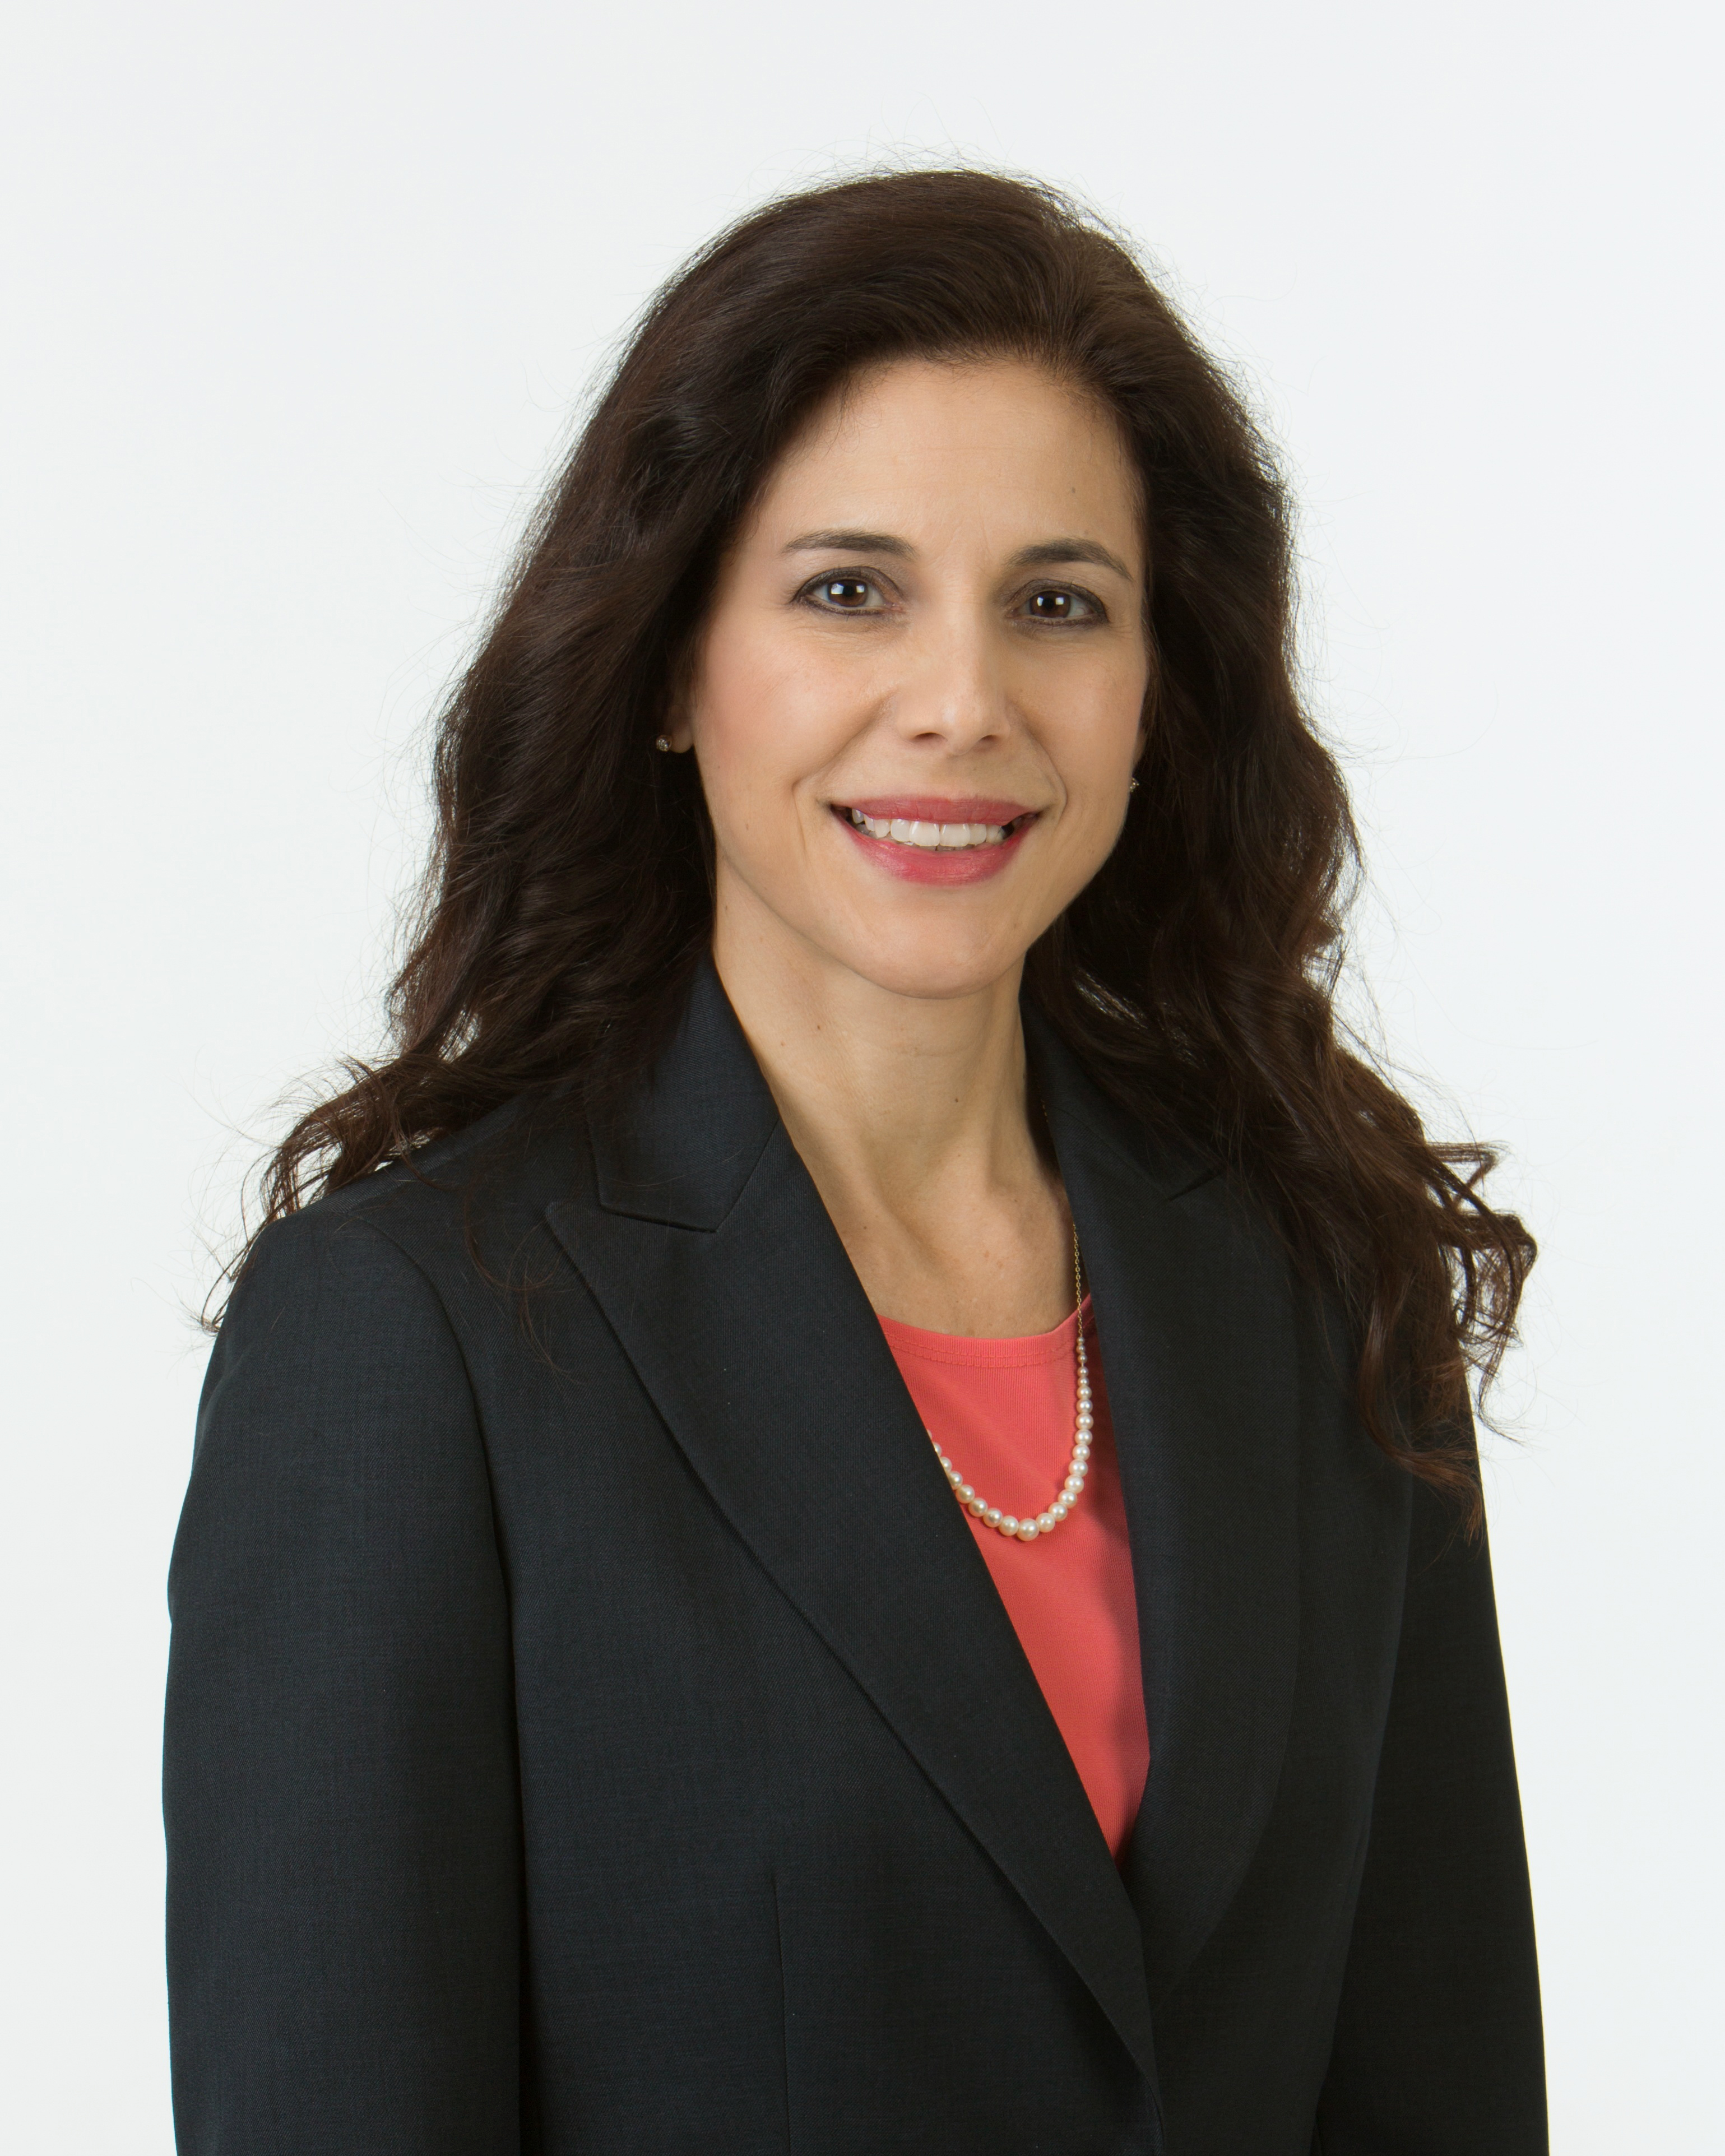 Christine Hause, Vice President